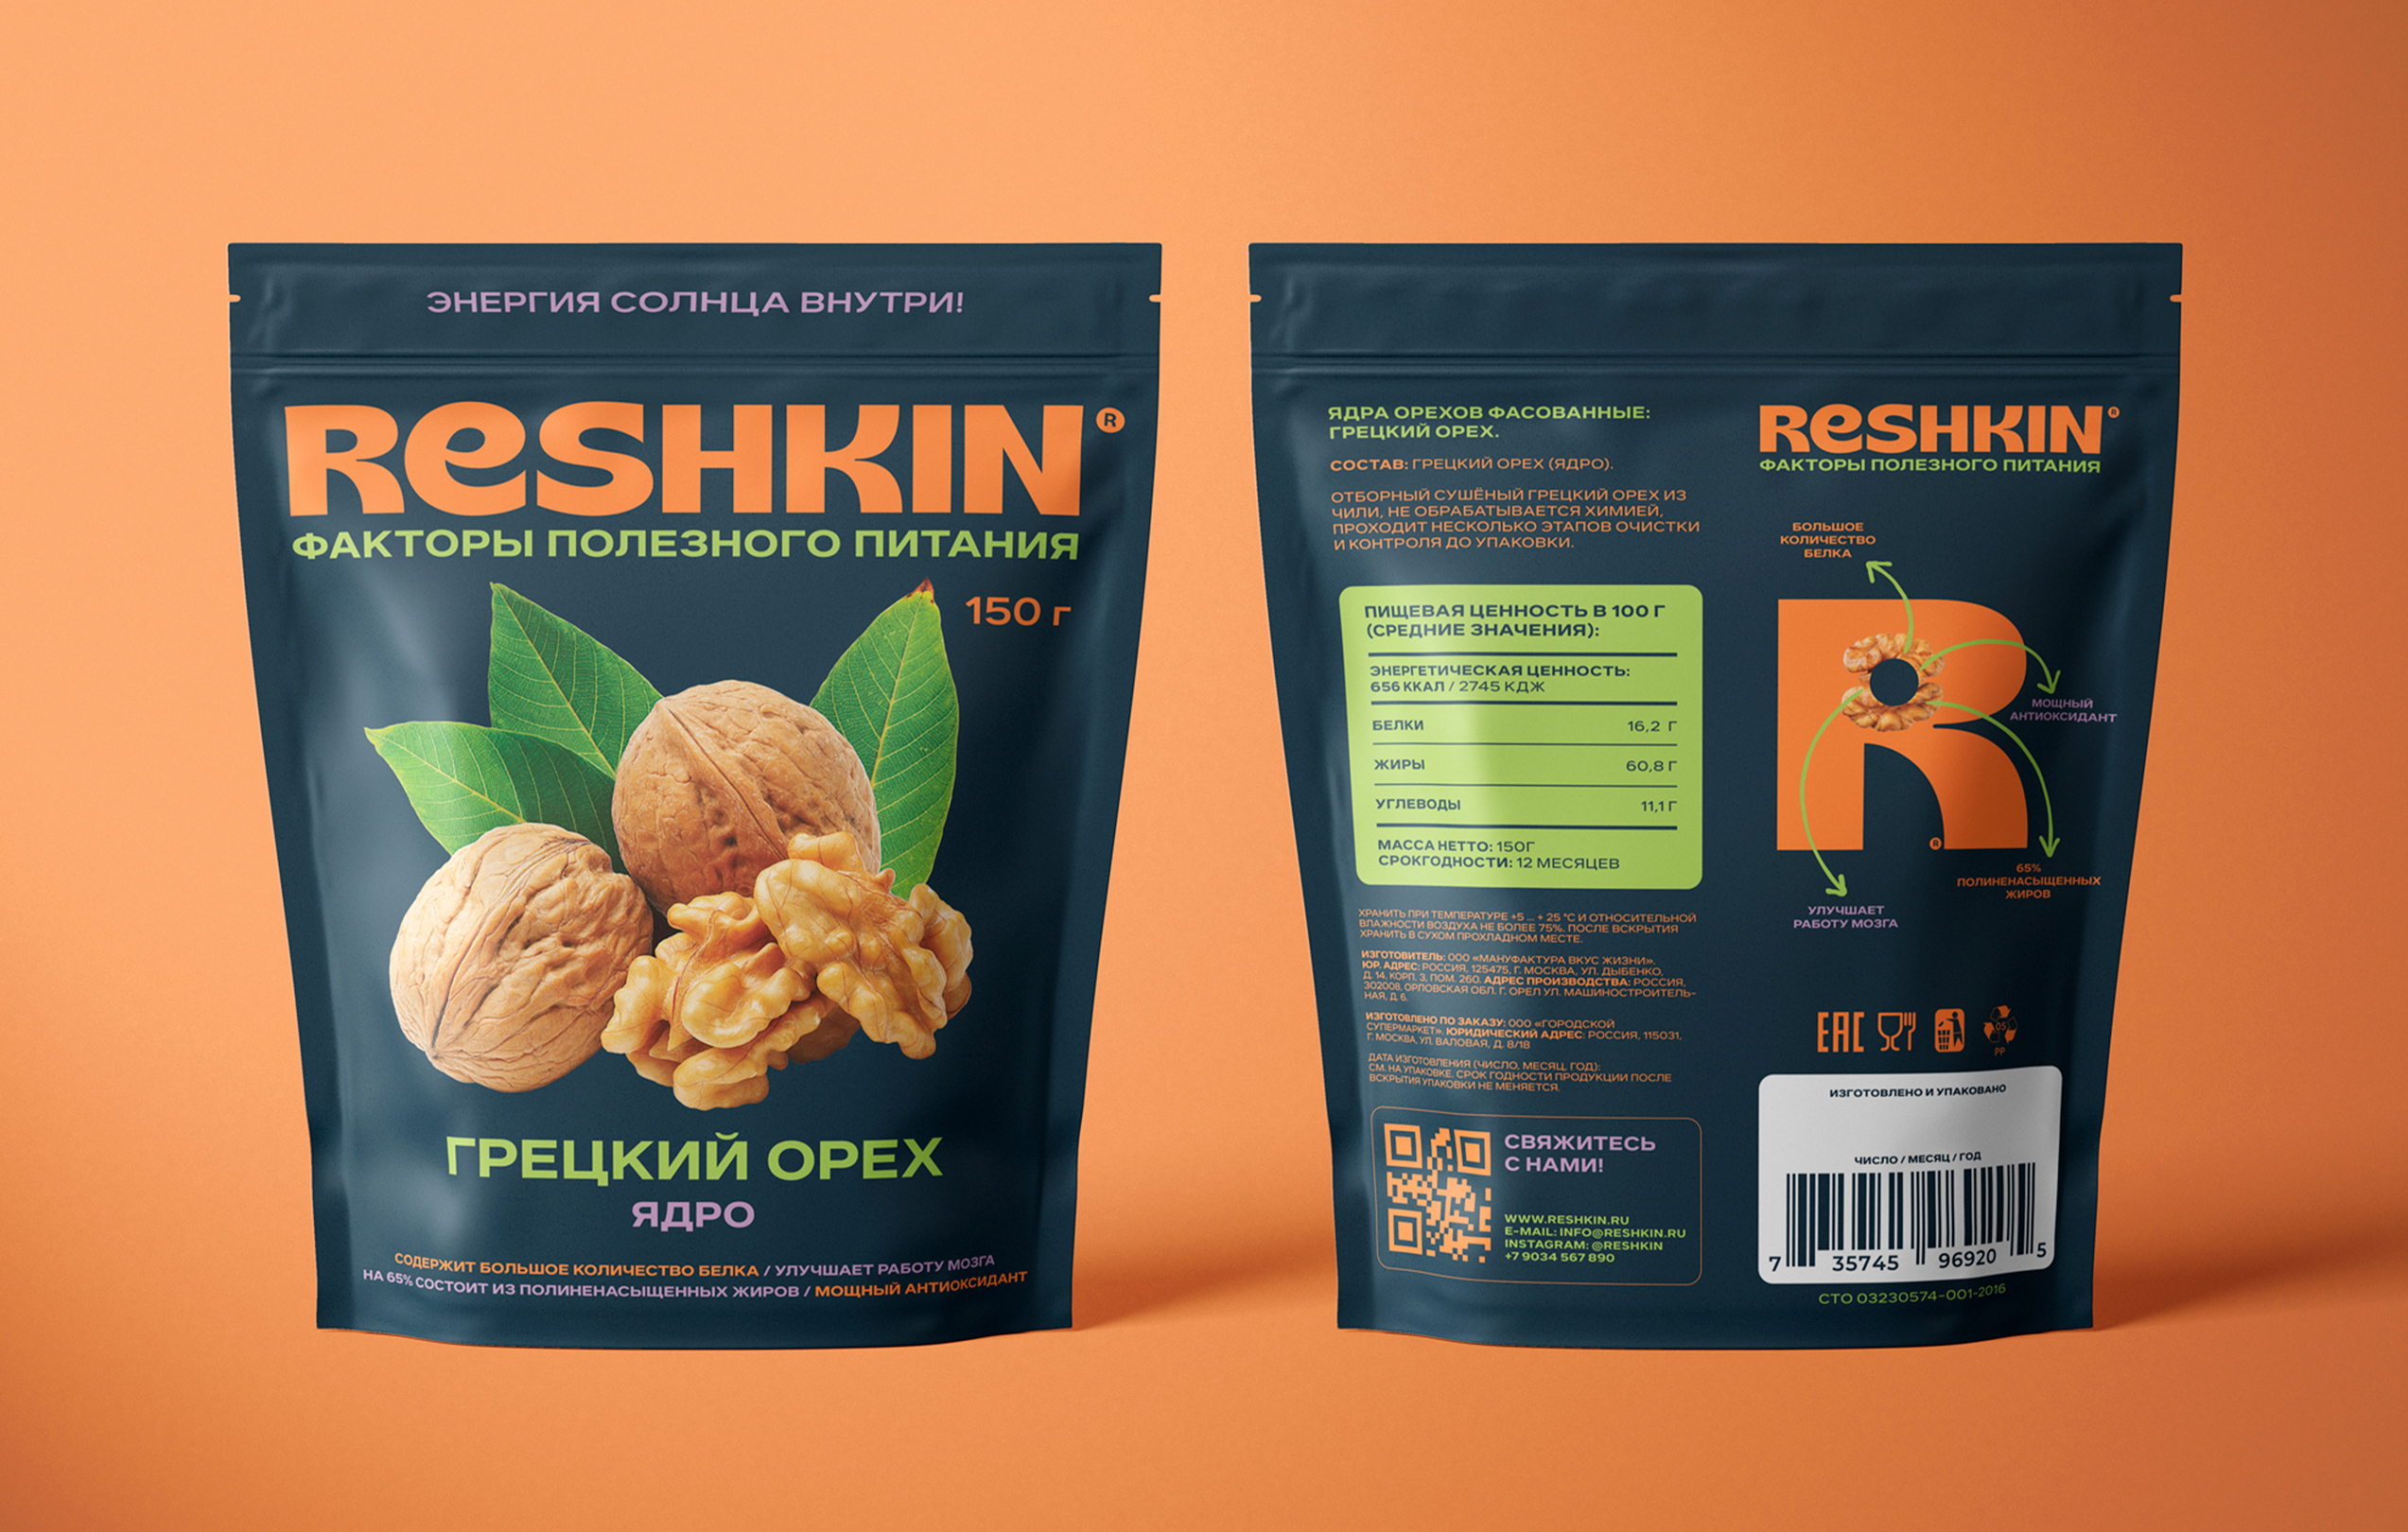 Reshkin / Nuts Shop